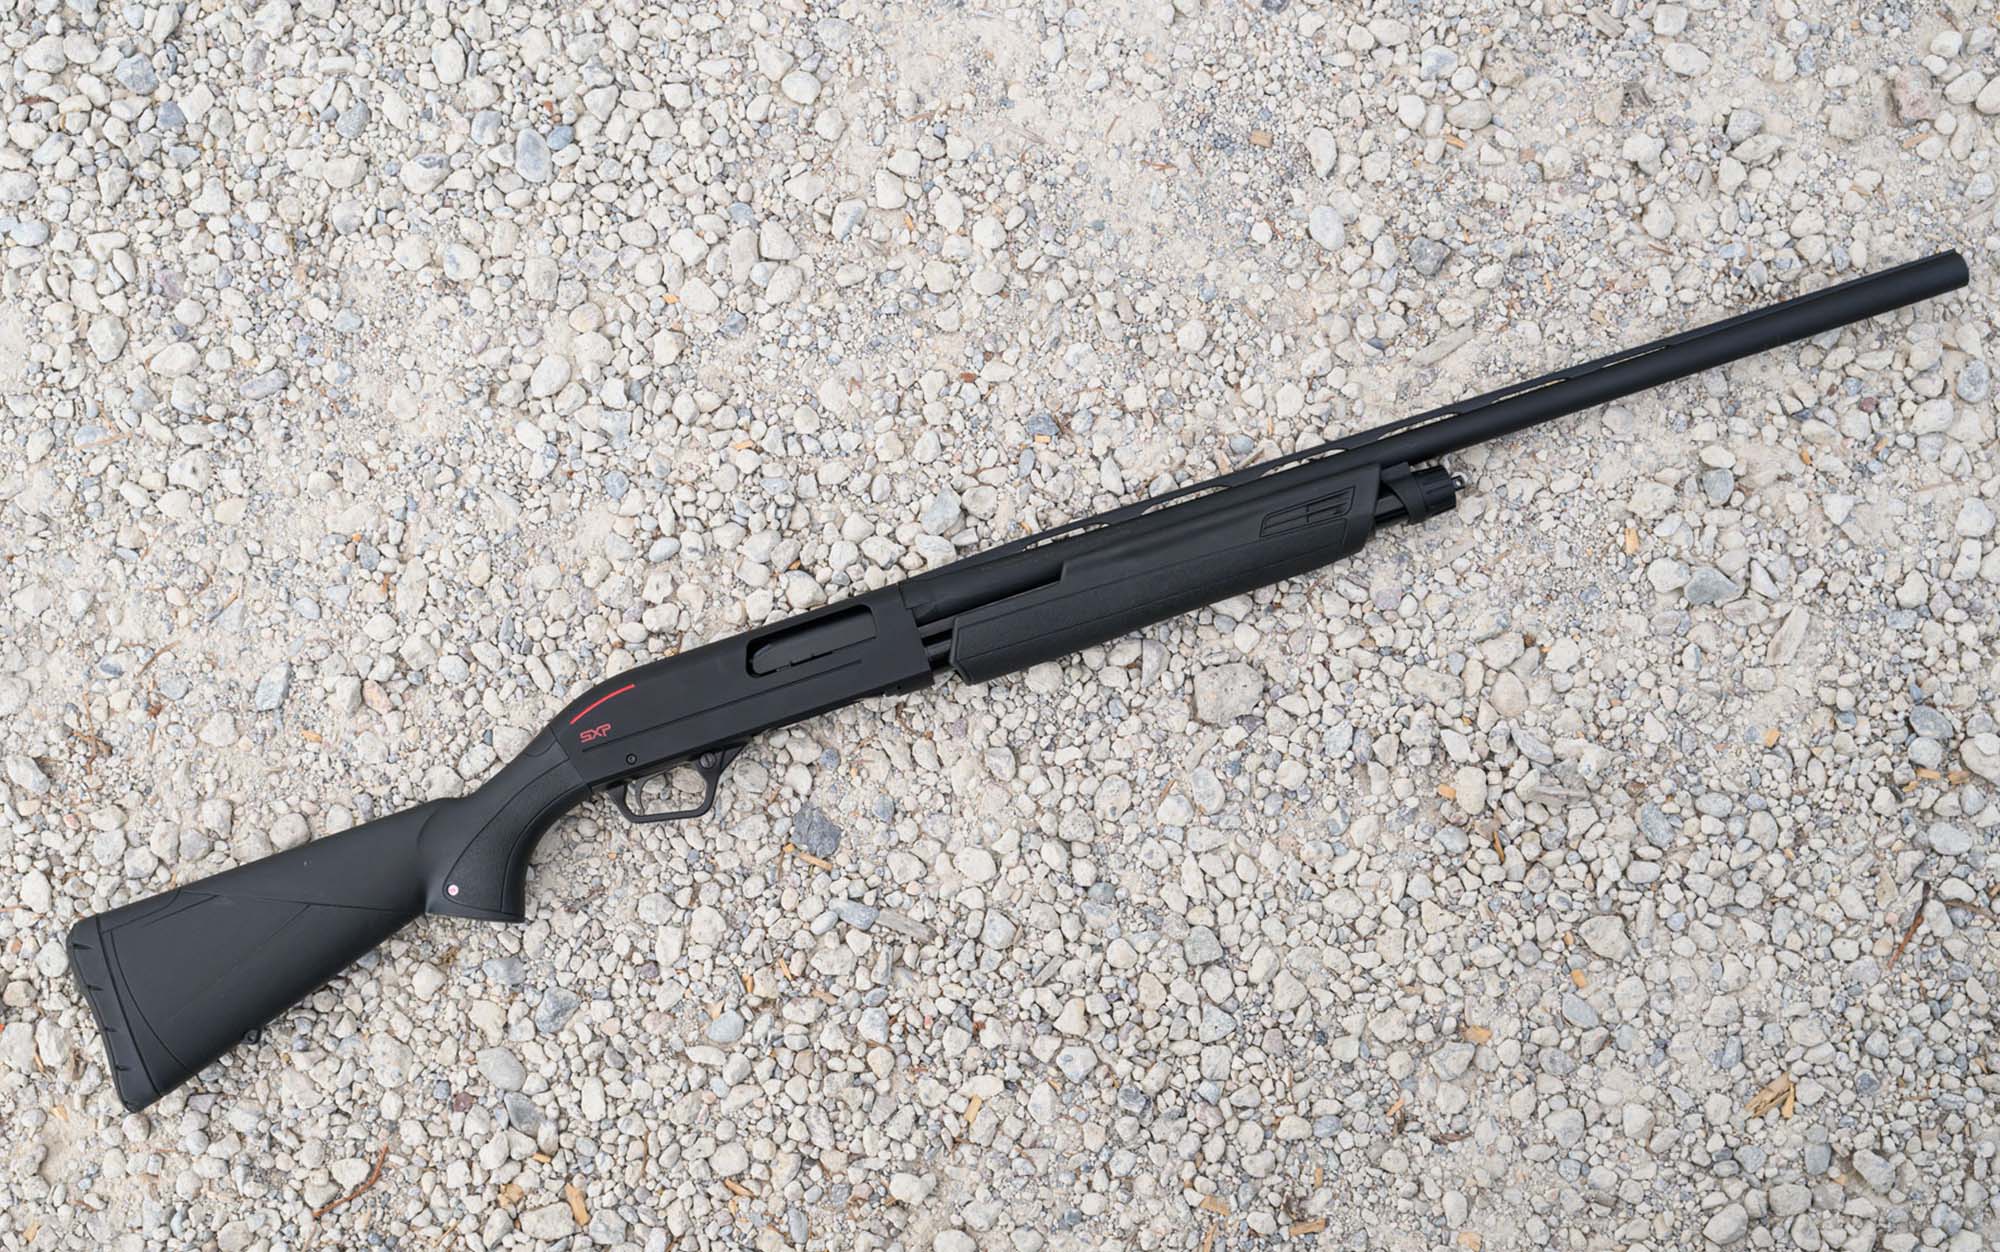 The Winchester SXP pump shotgun.